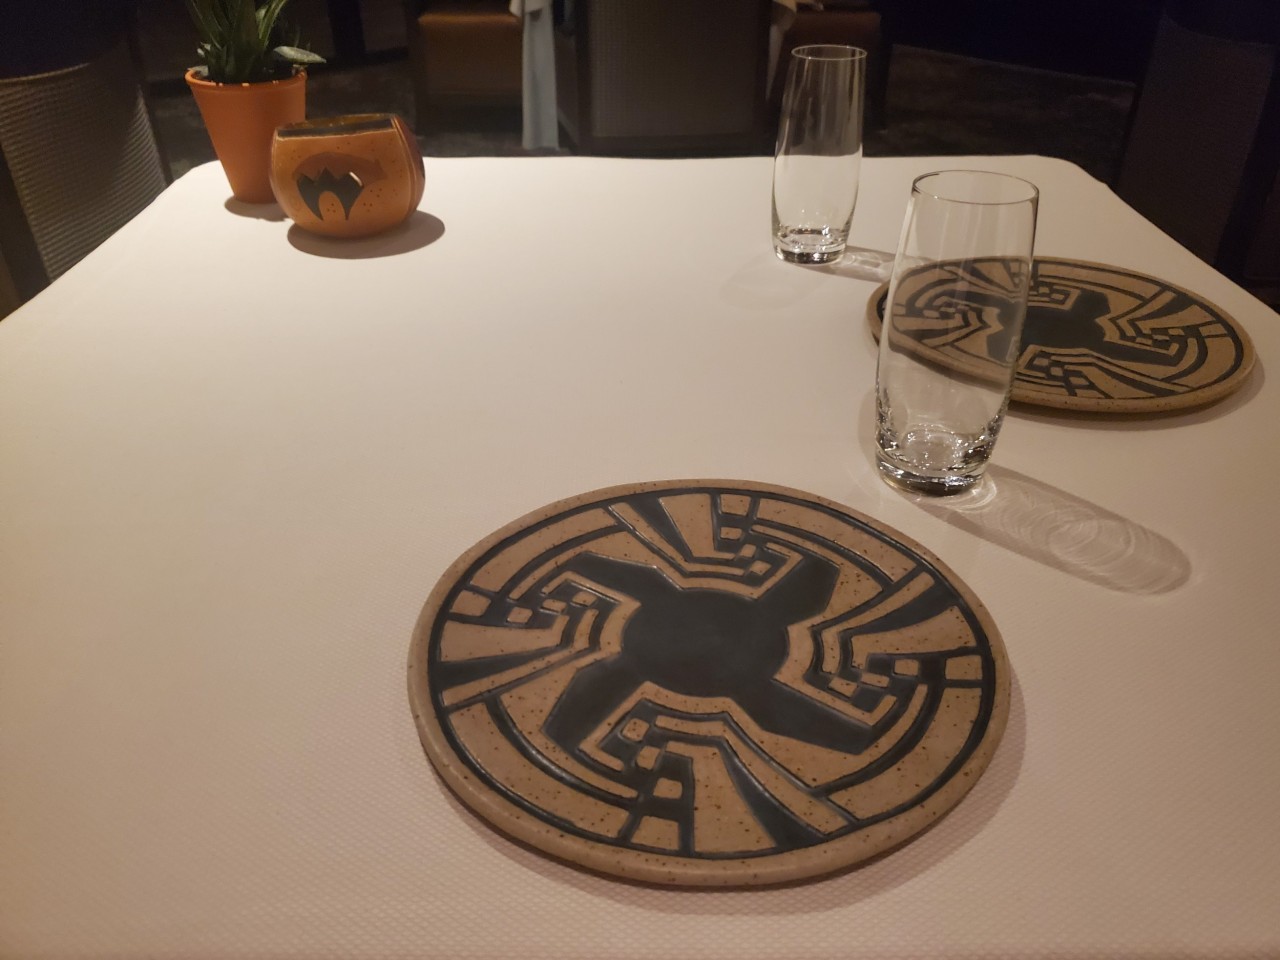 Table setting at Kai Restaurant